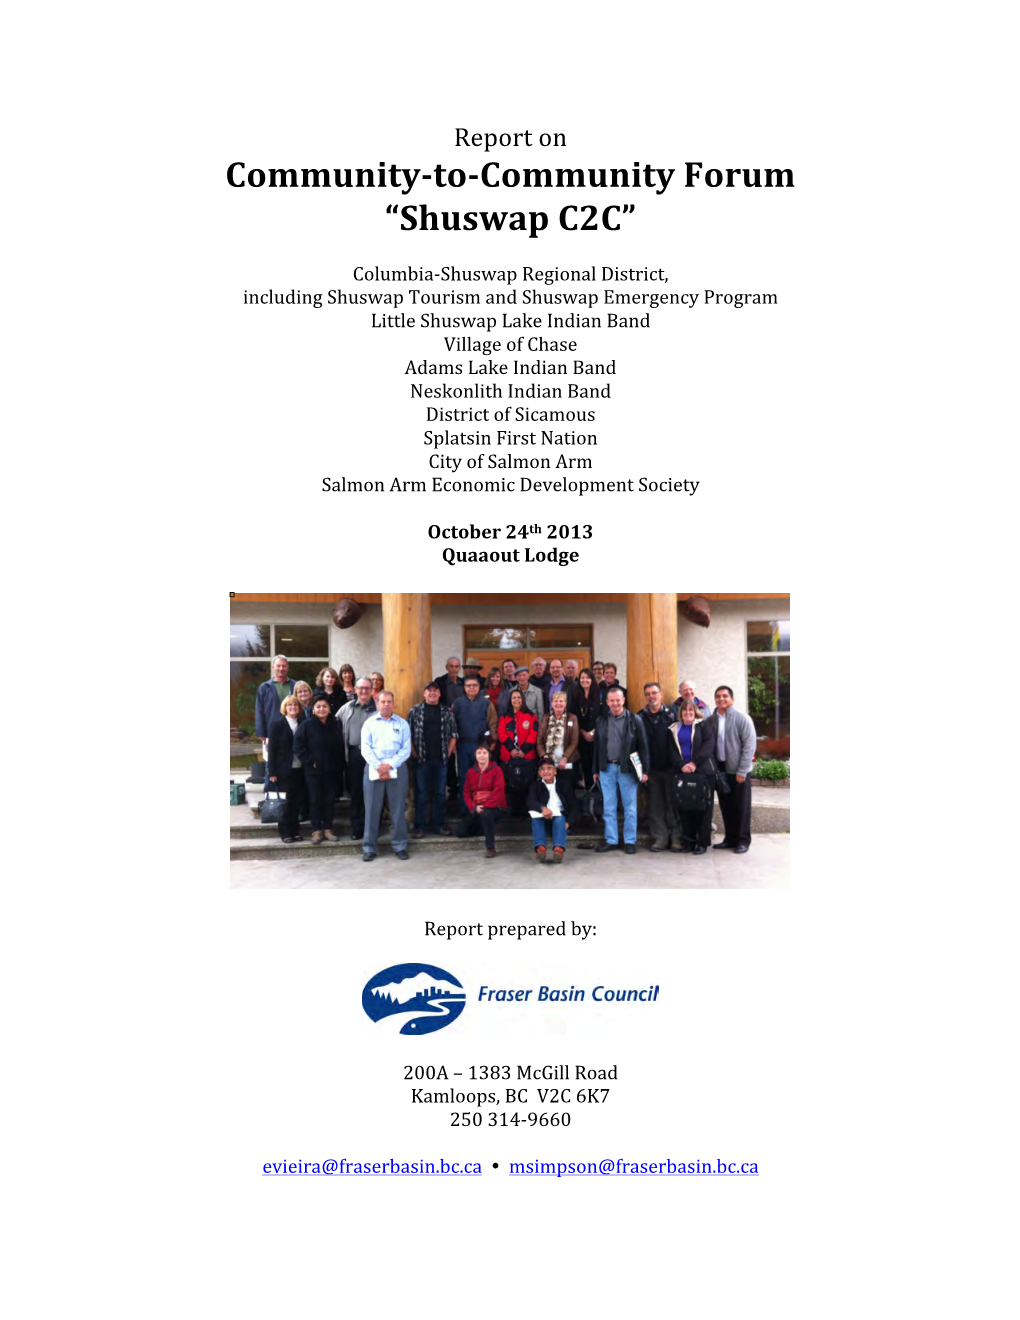 Community Forum “Shuswap C2C”